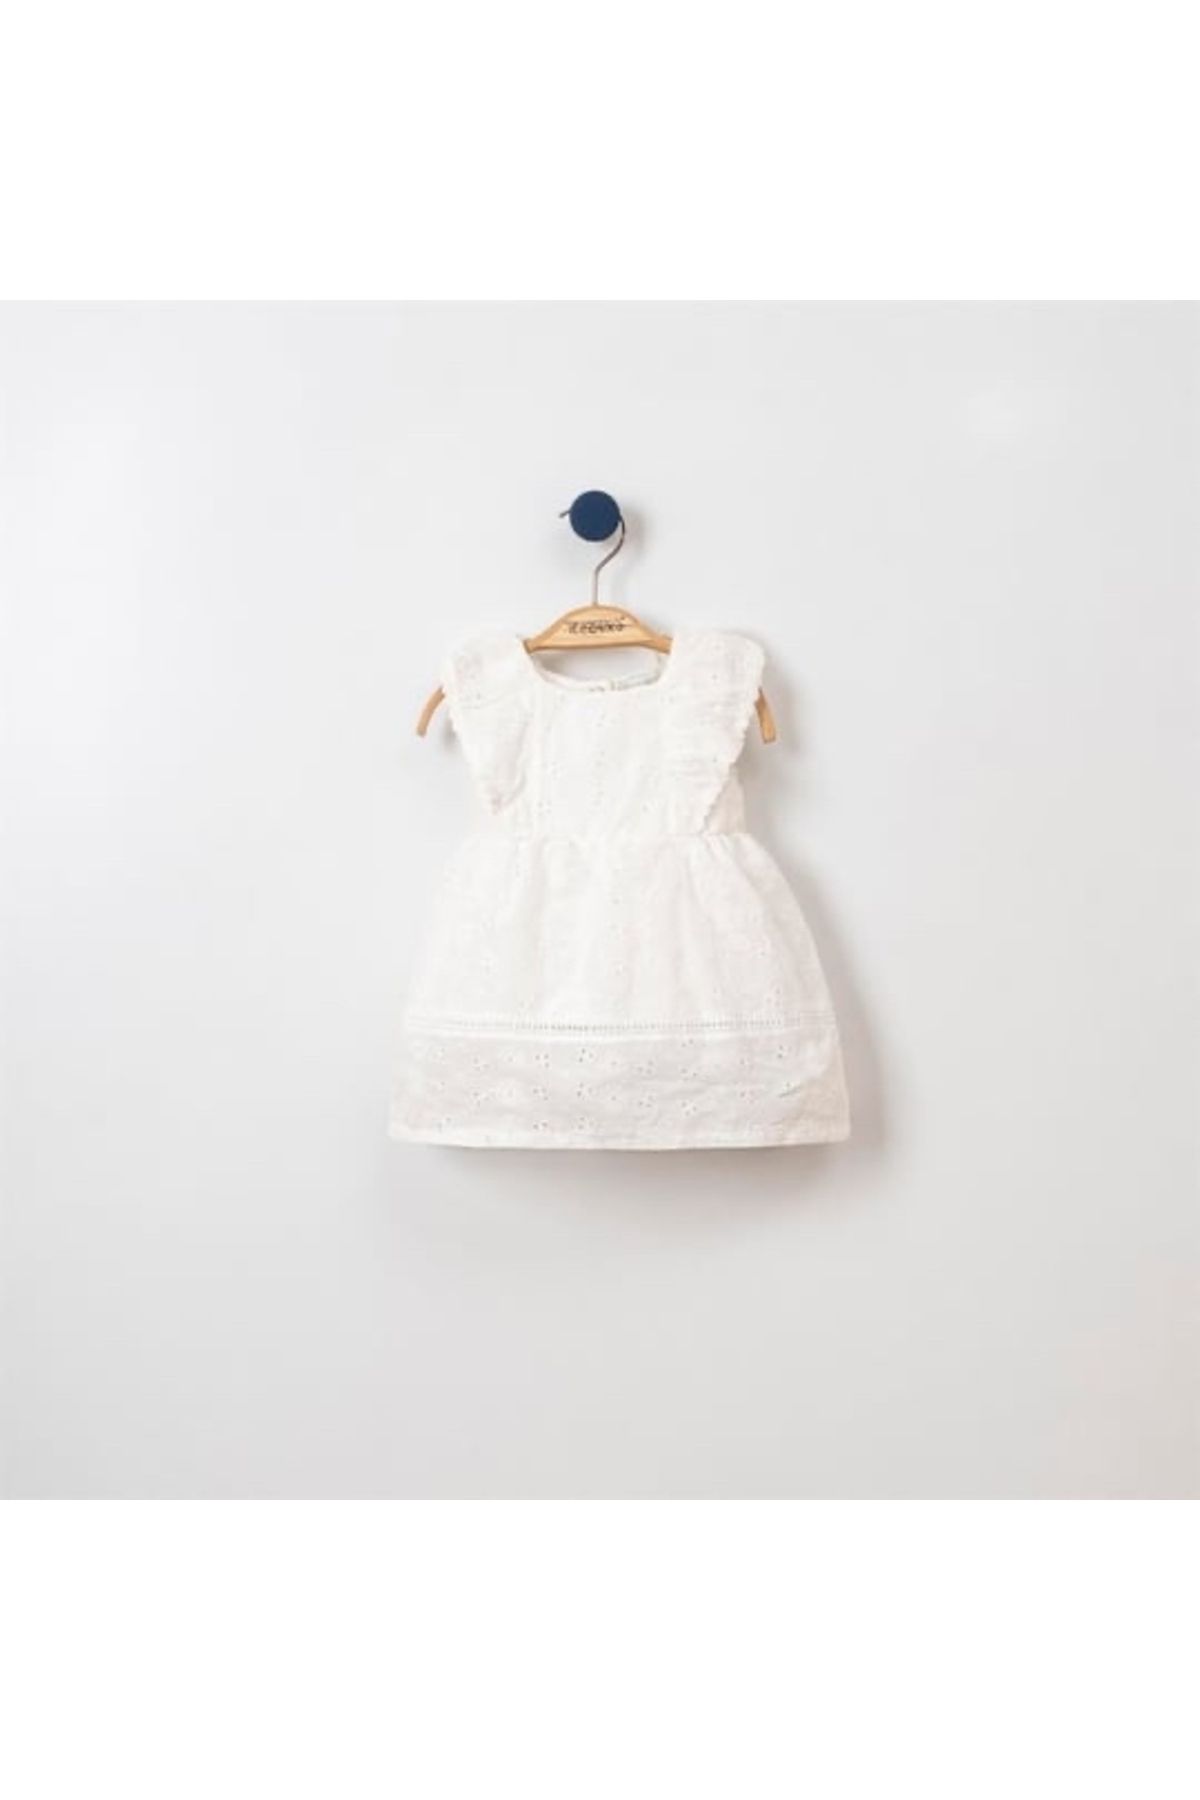 Necix's Fistolu Kız Bebek Elbise